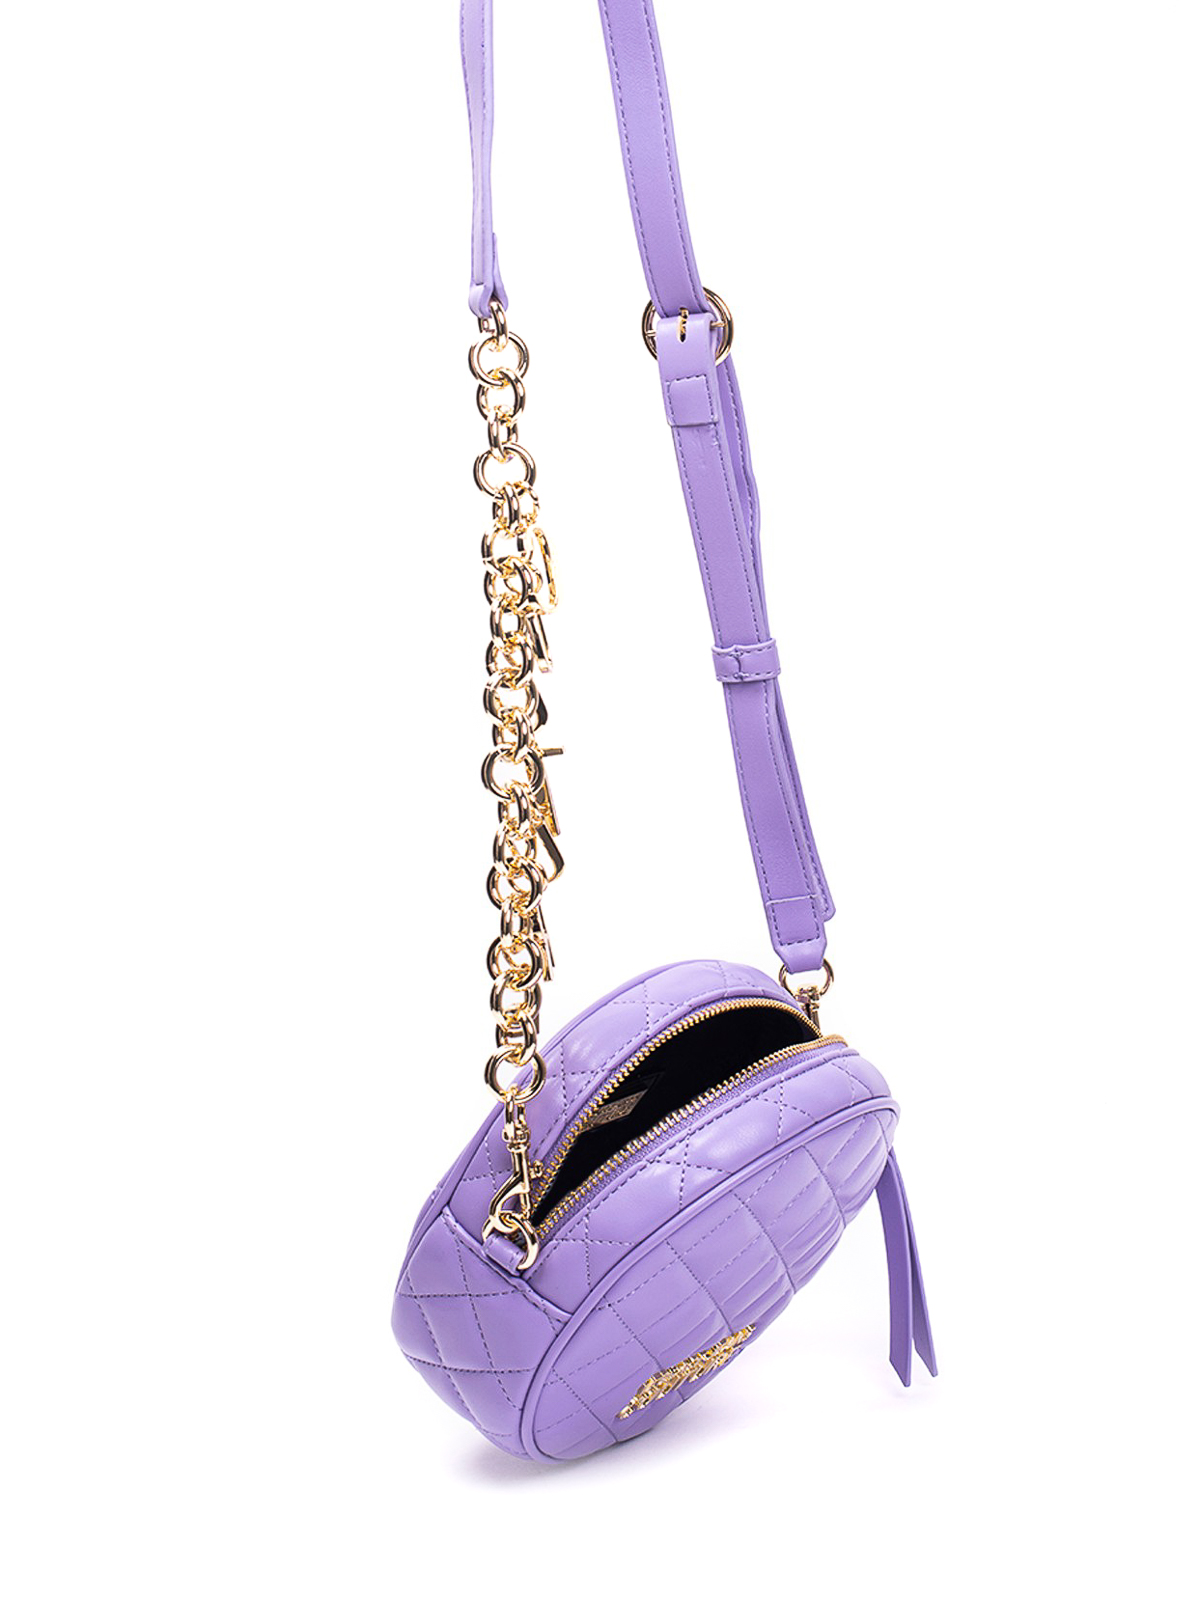 Shop Versace Jeans Couture Bolsa Bandolera - Púrpura Claro In Light Purple